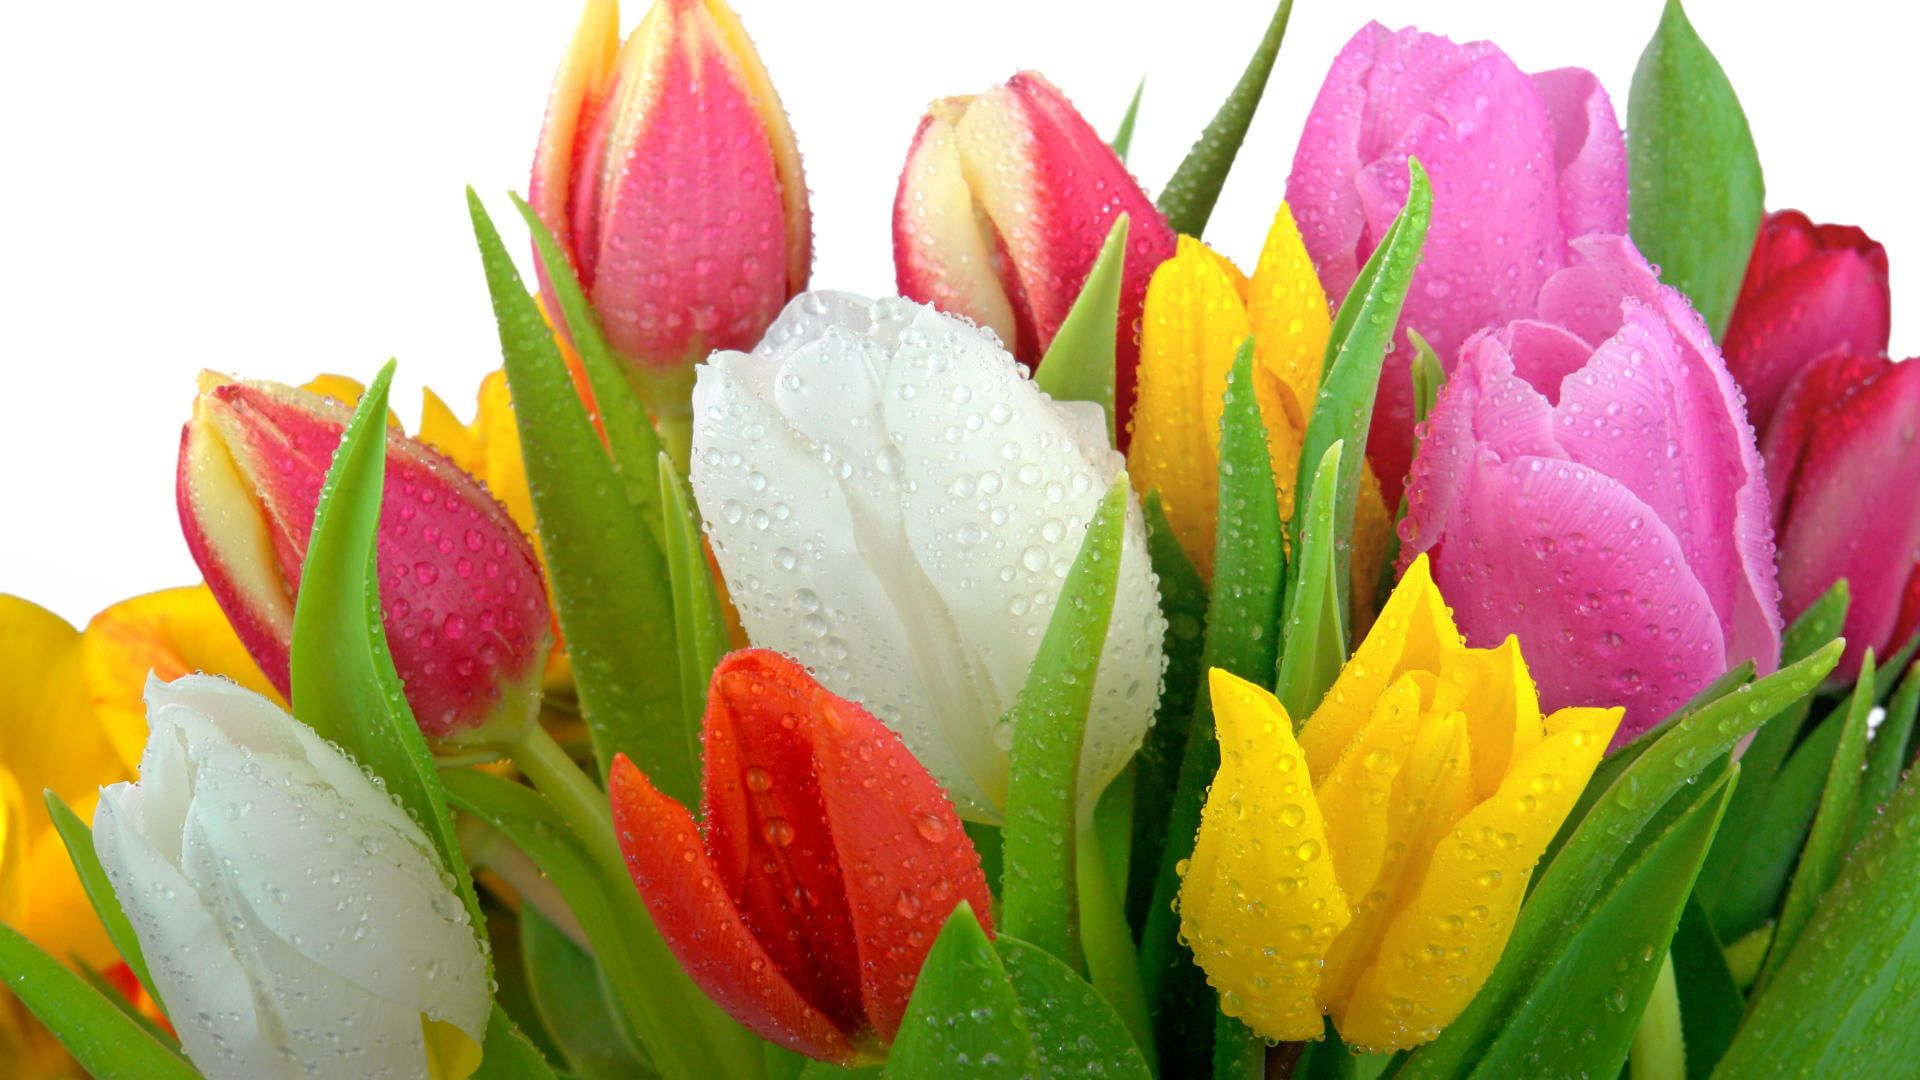 1920x1080 assorted-color tulip flower #leaves #water #drops #tulips #1080P #wallpaper #hdwallpaper #desktop | Fresh tulips, Tulips, Flower vase arrangements